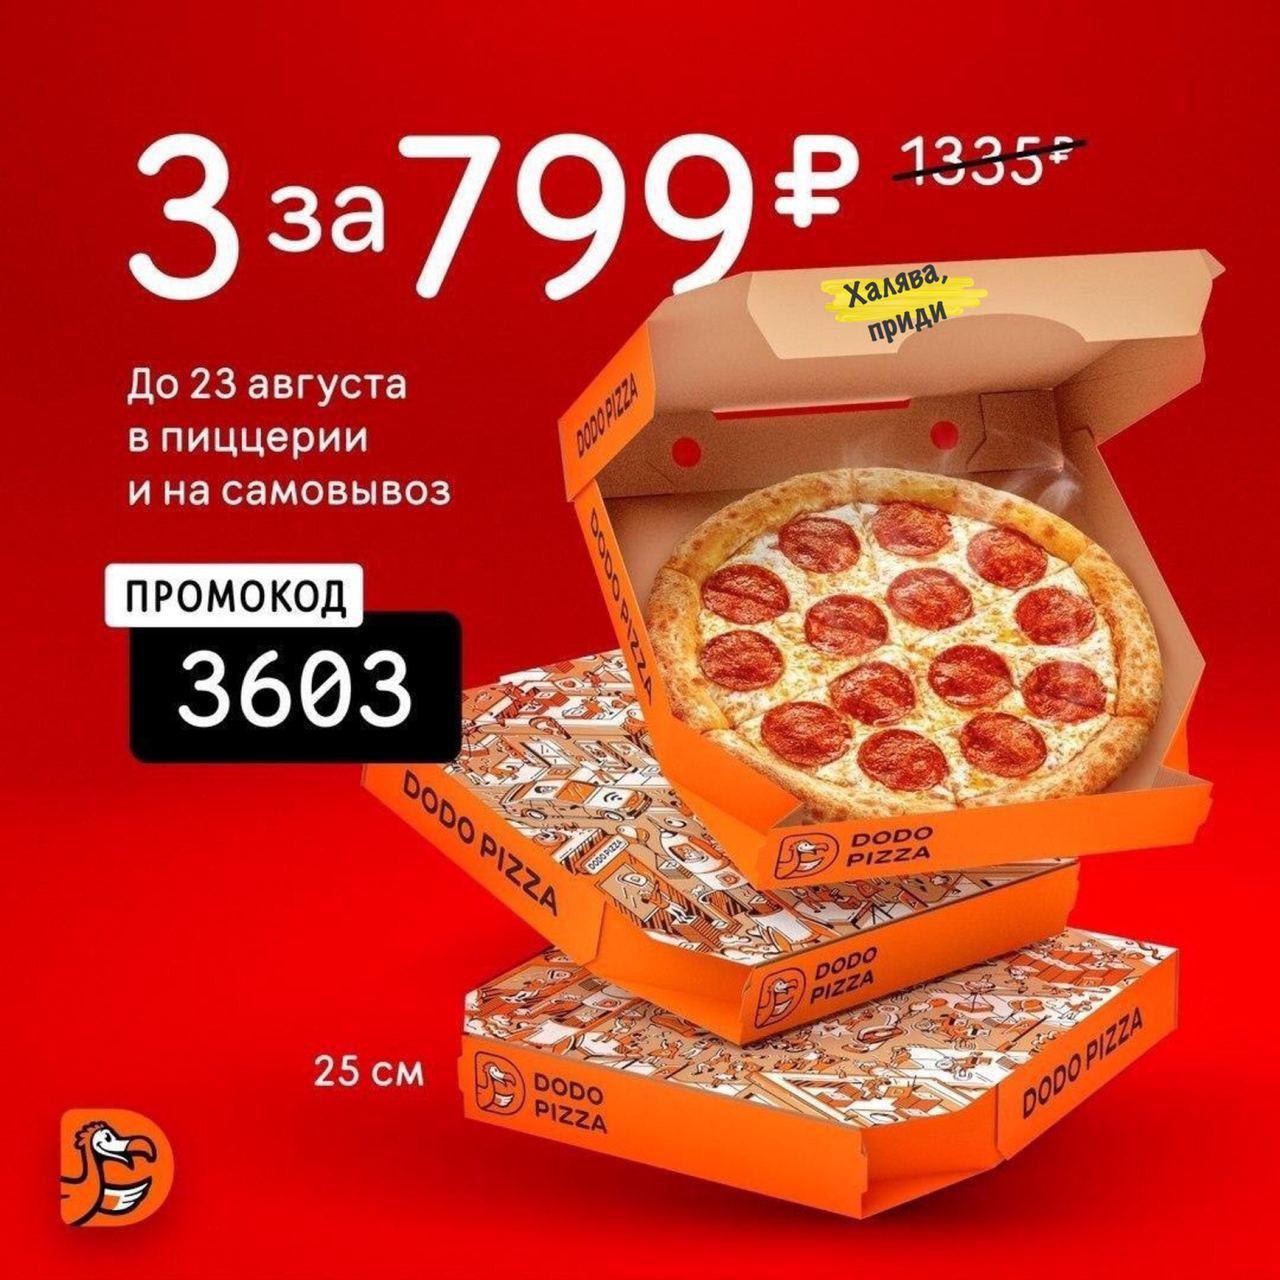 Акции на пиццу в спб с доставкой